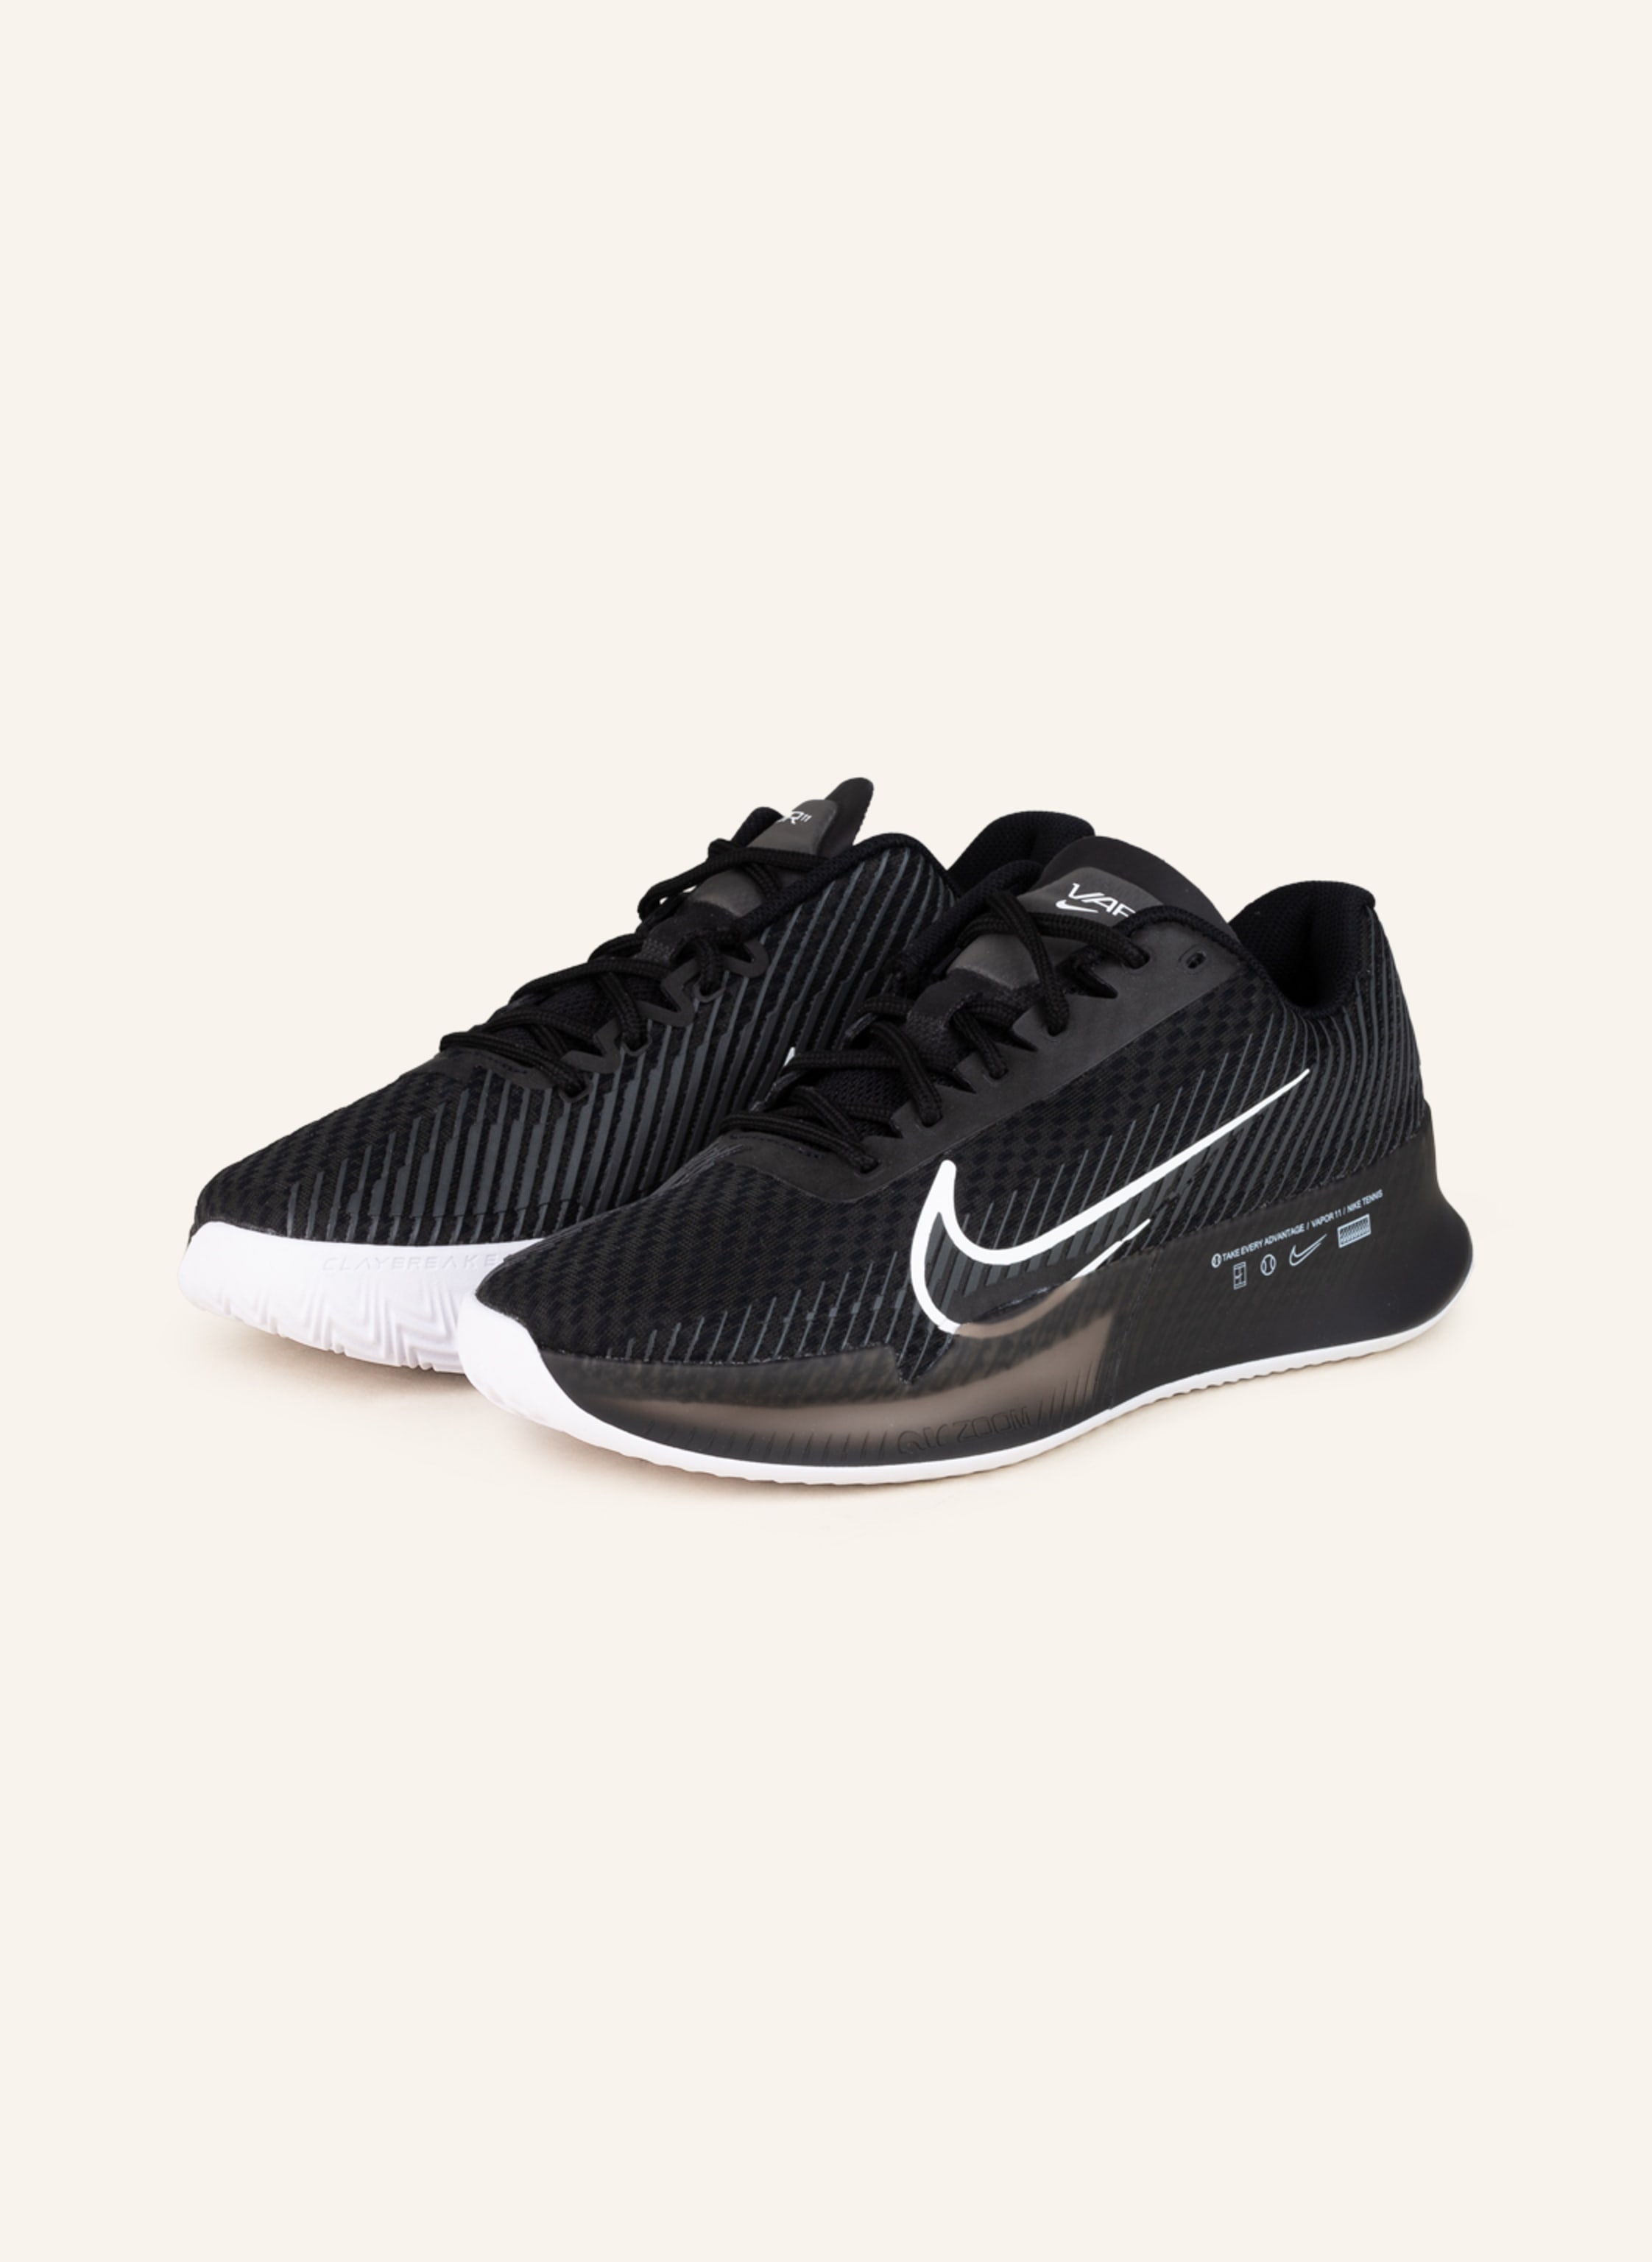 Nike Tennis shoes NIKE COURT AIR 11 in black/ gray | Breuninger